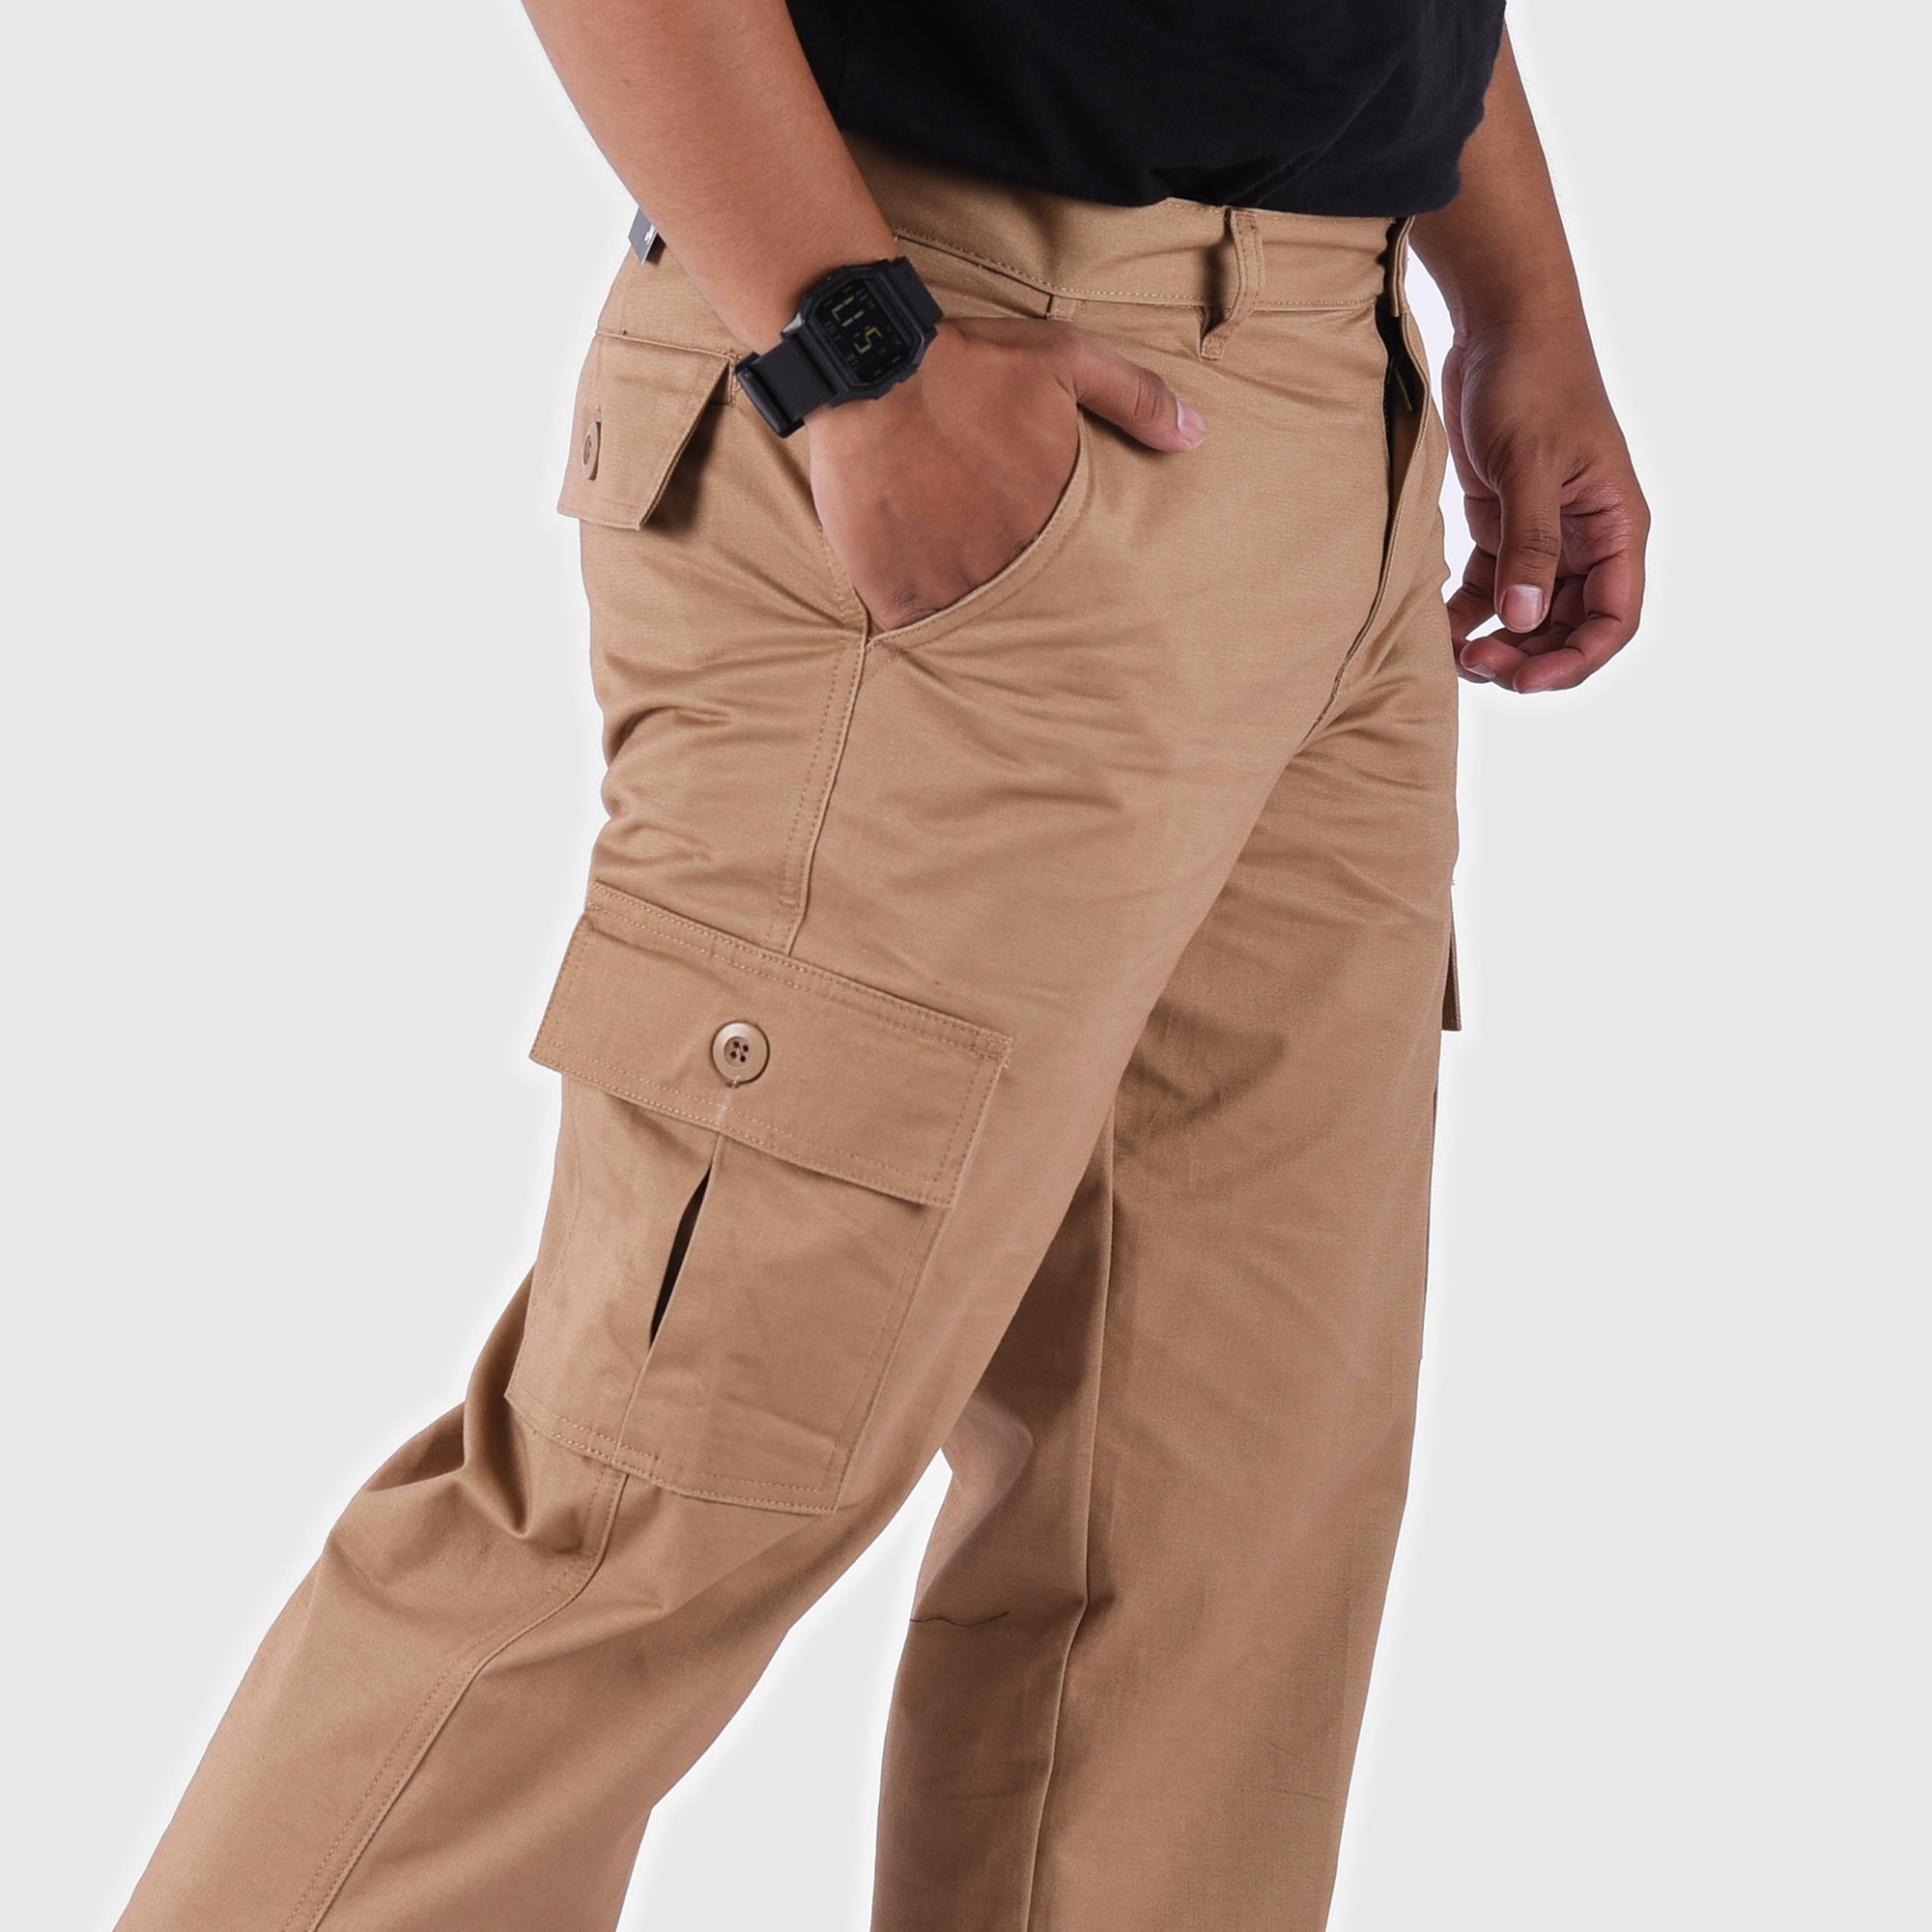 CG007 Brown Johnson Cargo Pants